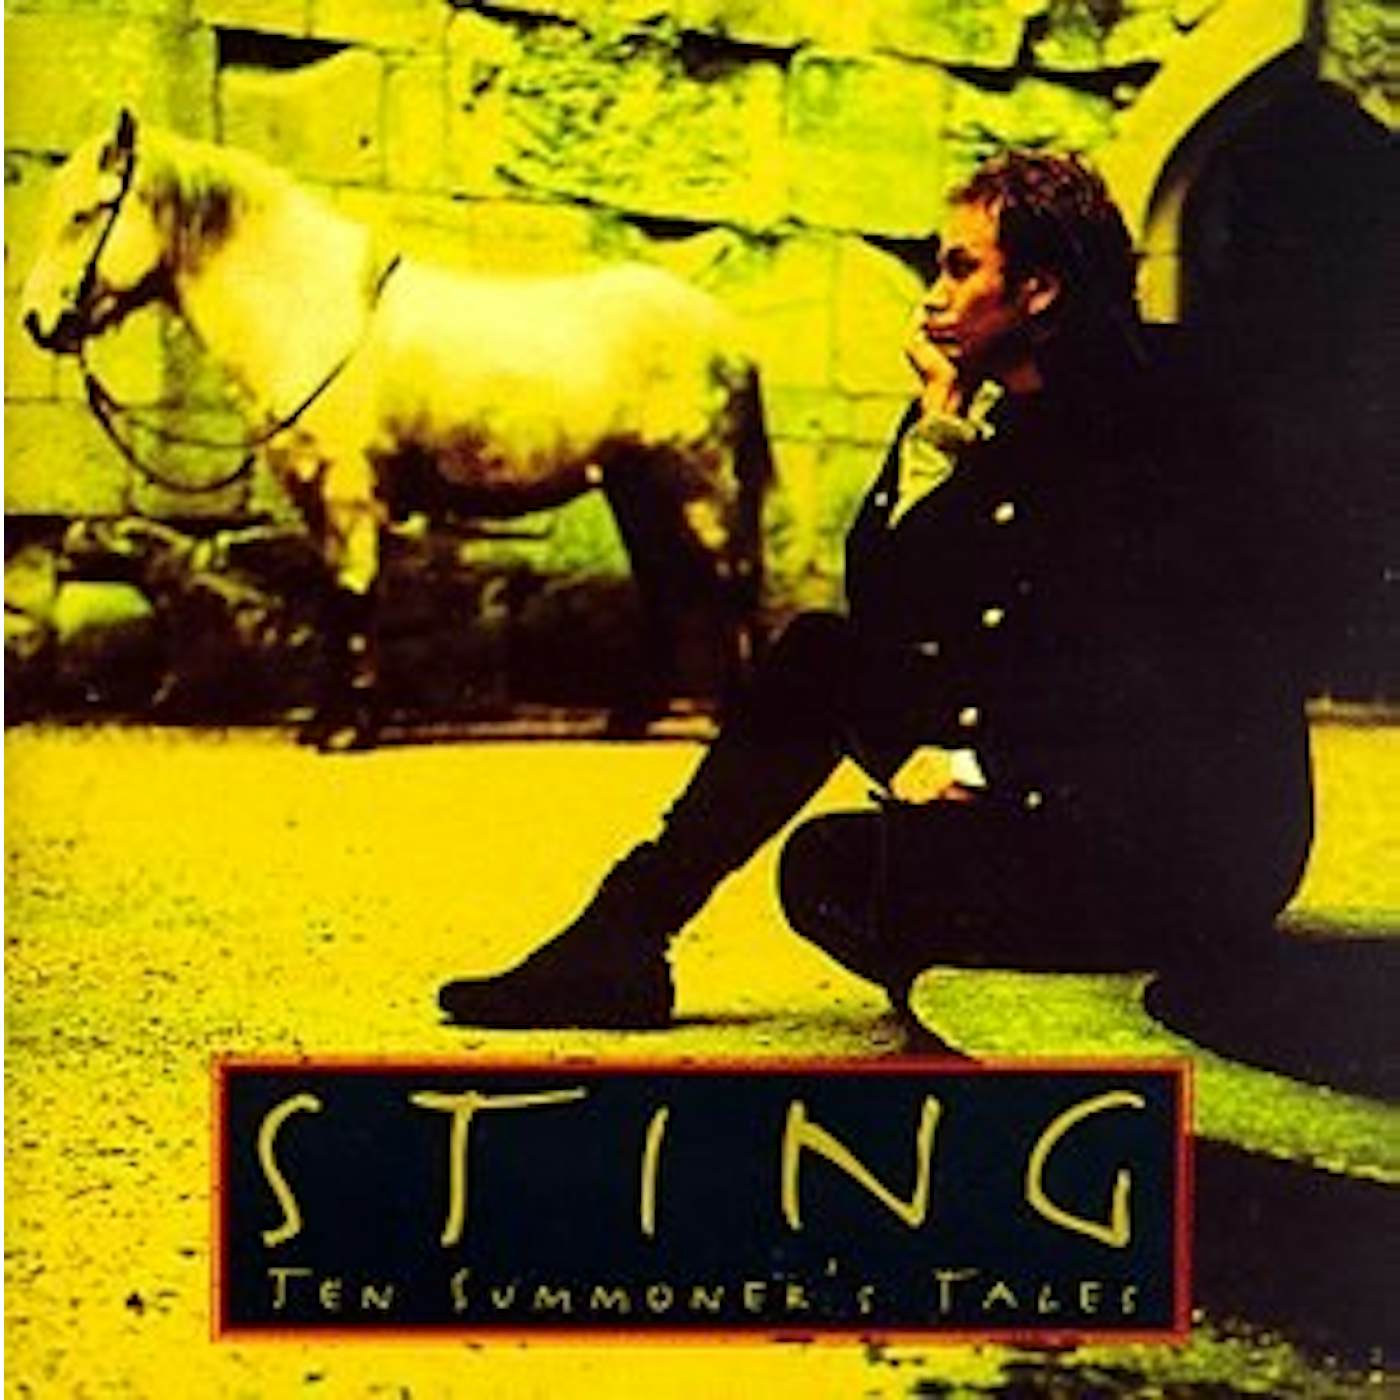 Sting Ten Summoner's Tales Vinyl Record